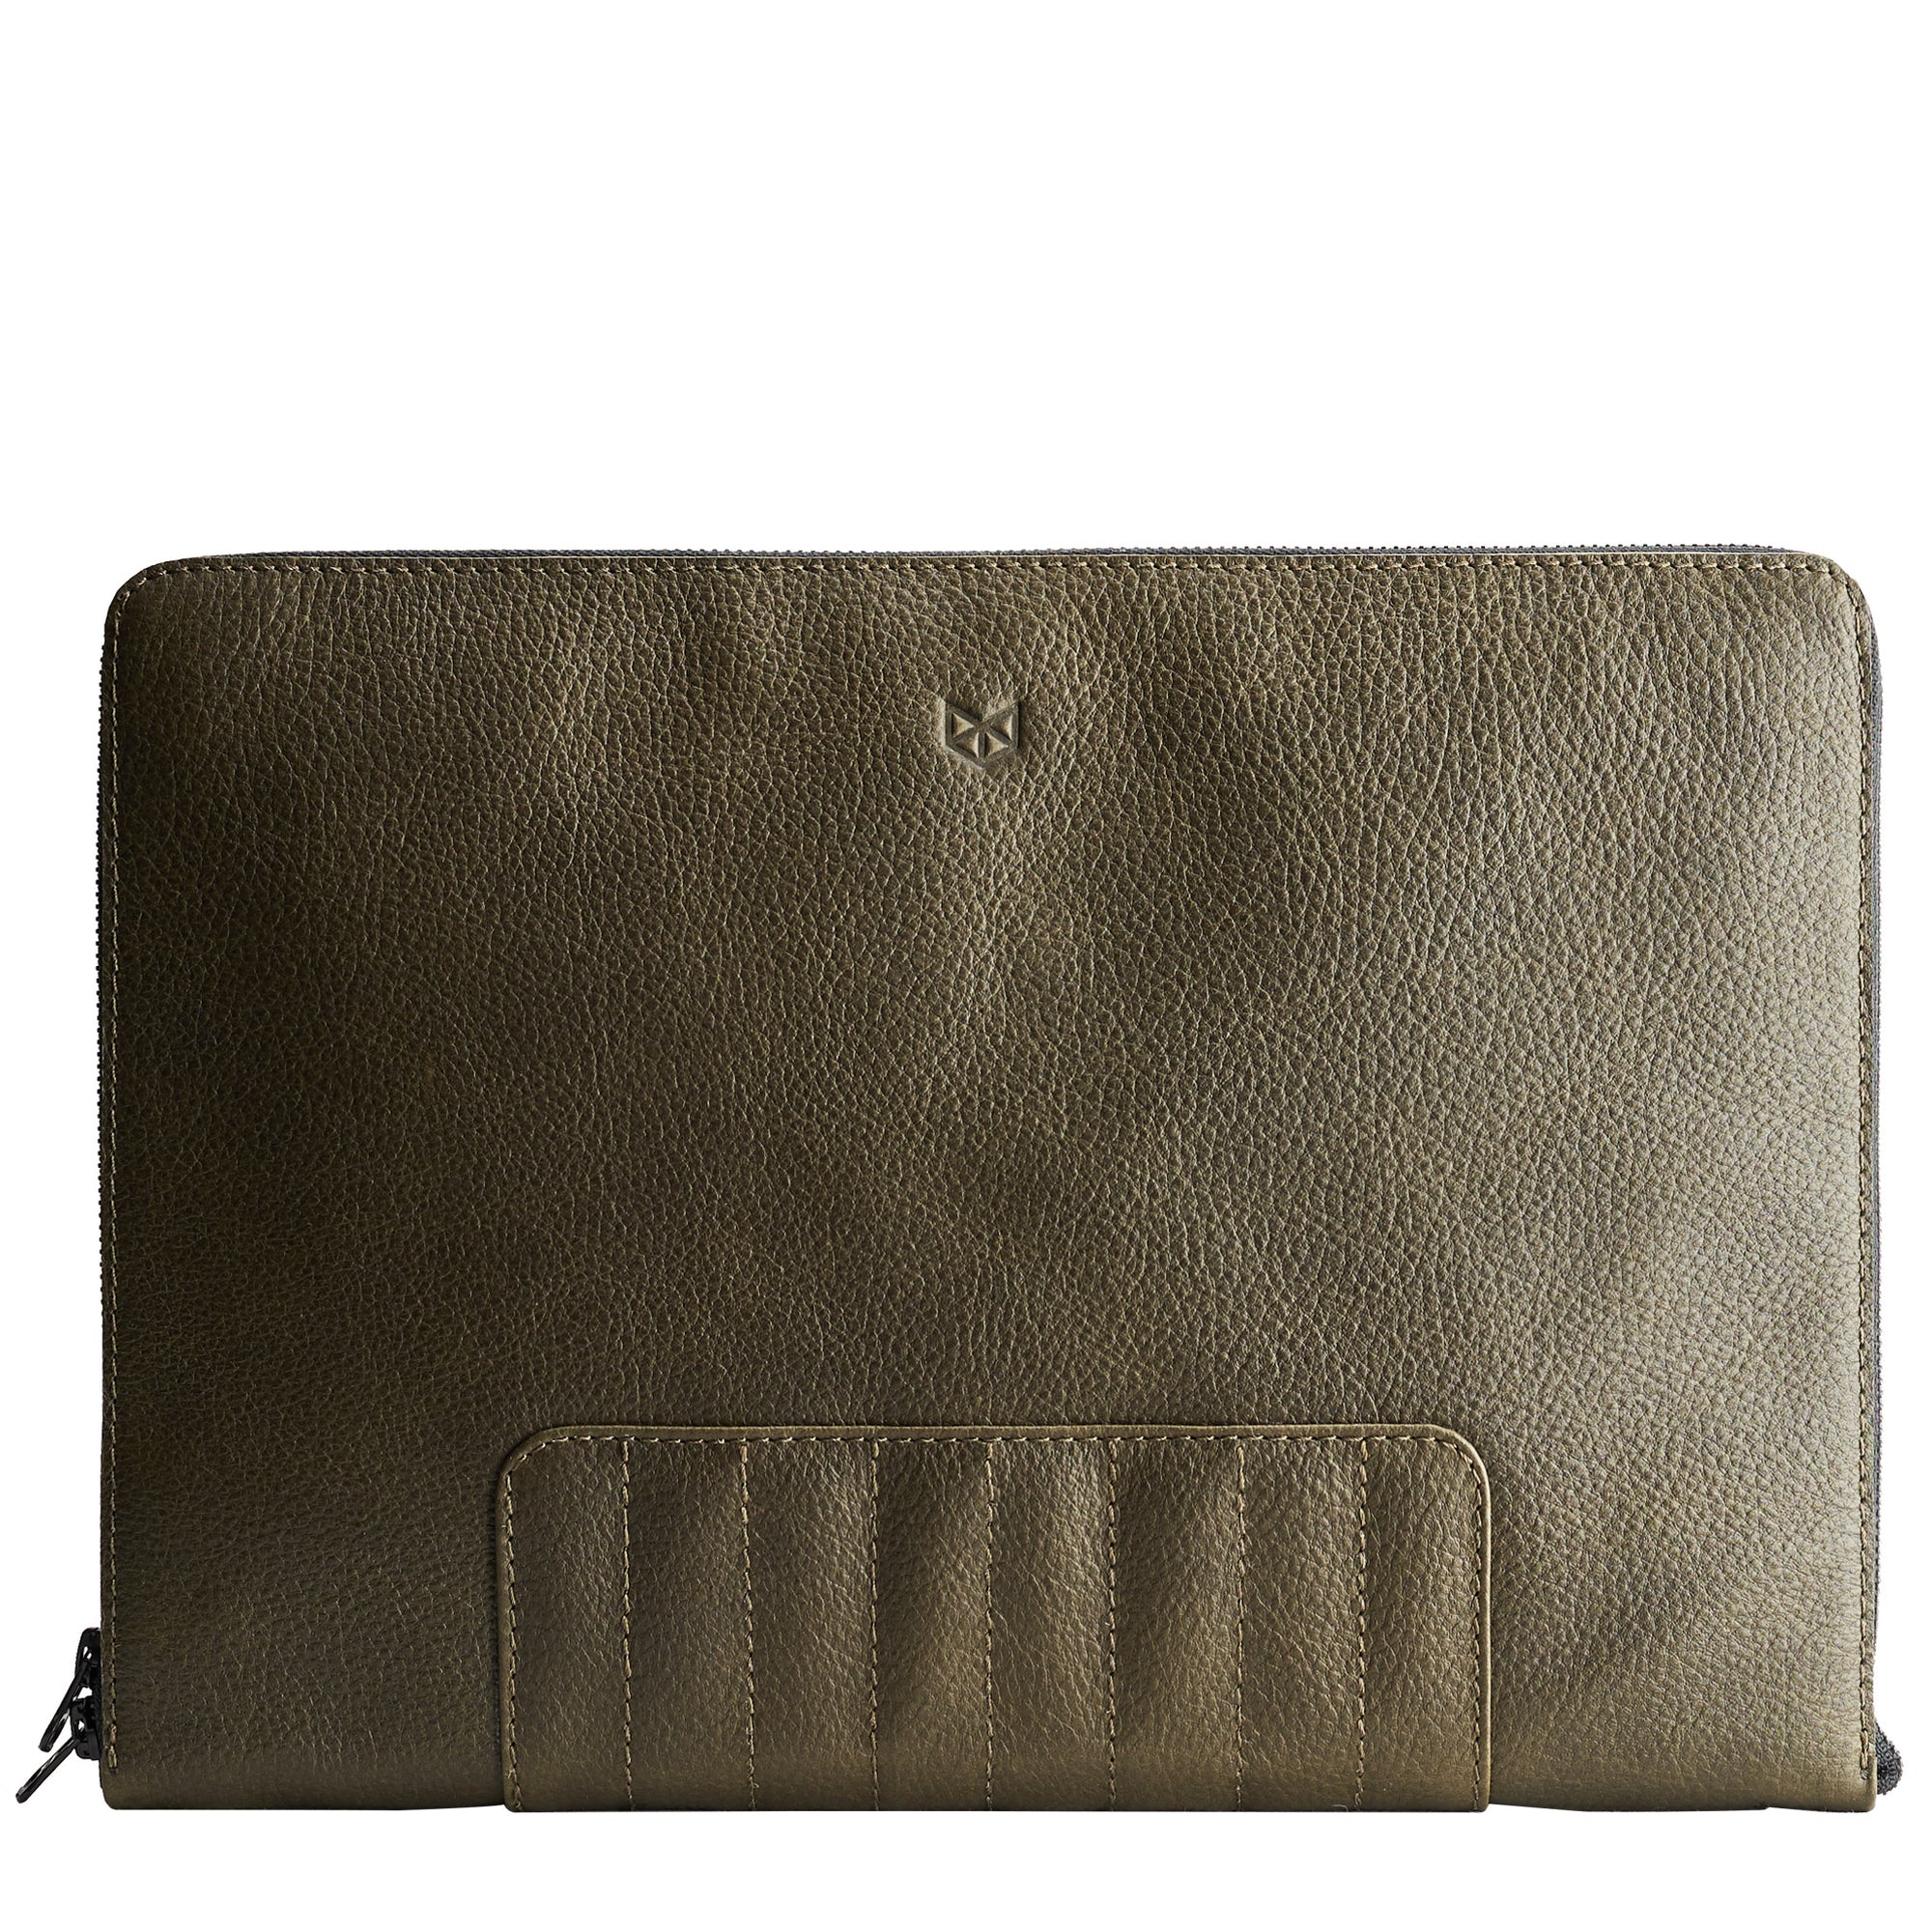 Green Leather Laptop Portfolio Case. Laptops & devices Bag.